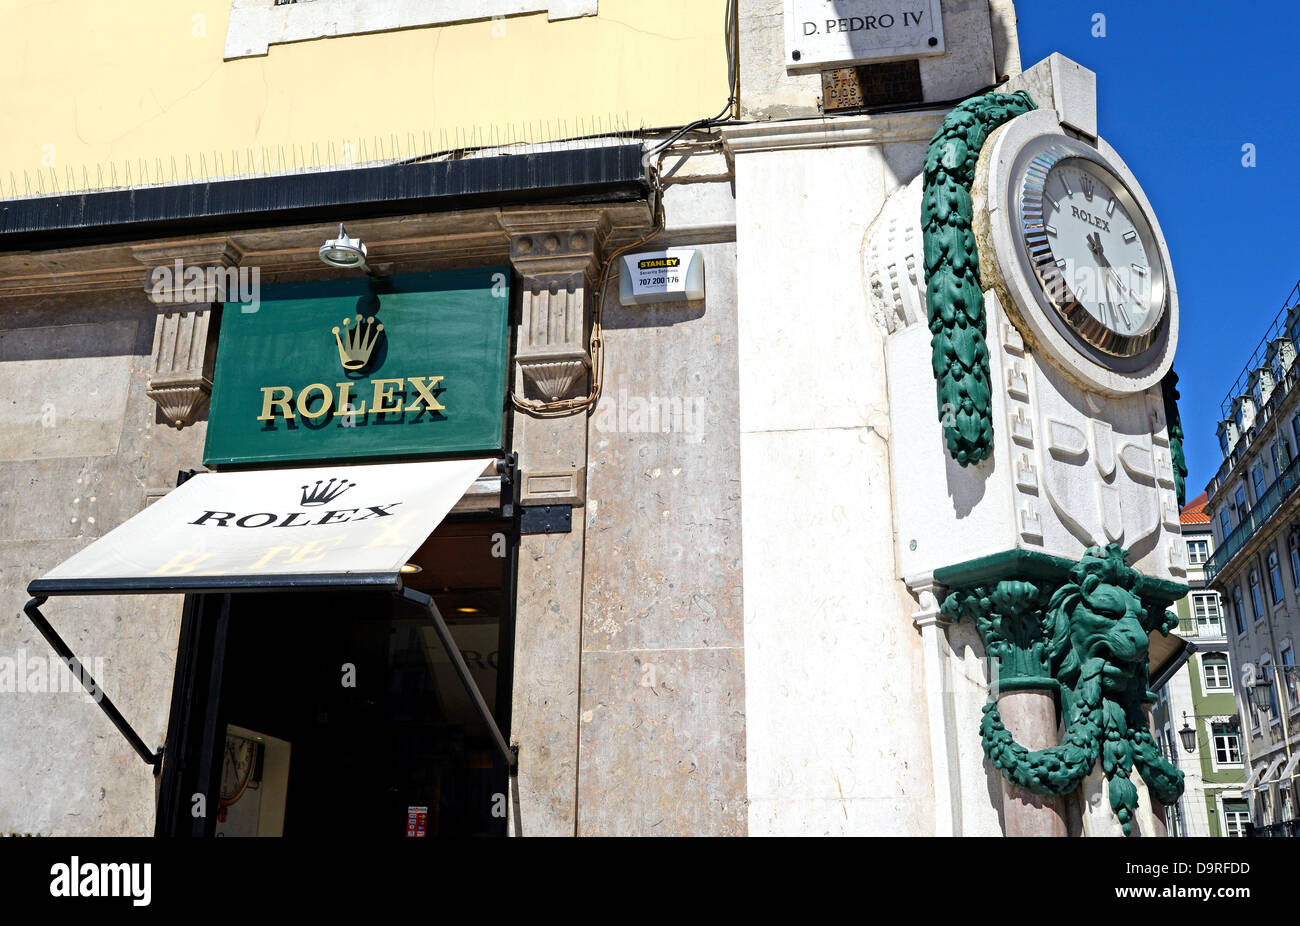 Rolex boutique Dom Pedro IV square Lisbon Portugal Stock Photo - Alamy